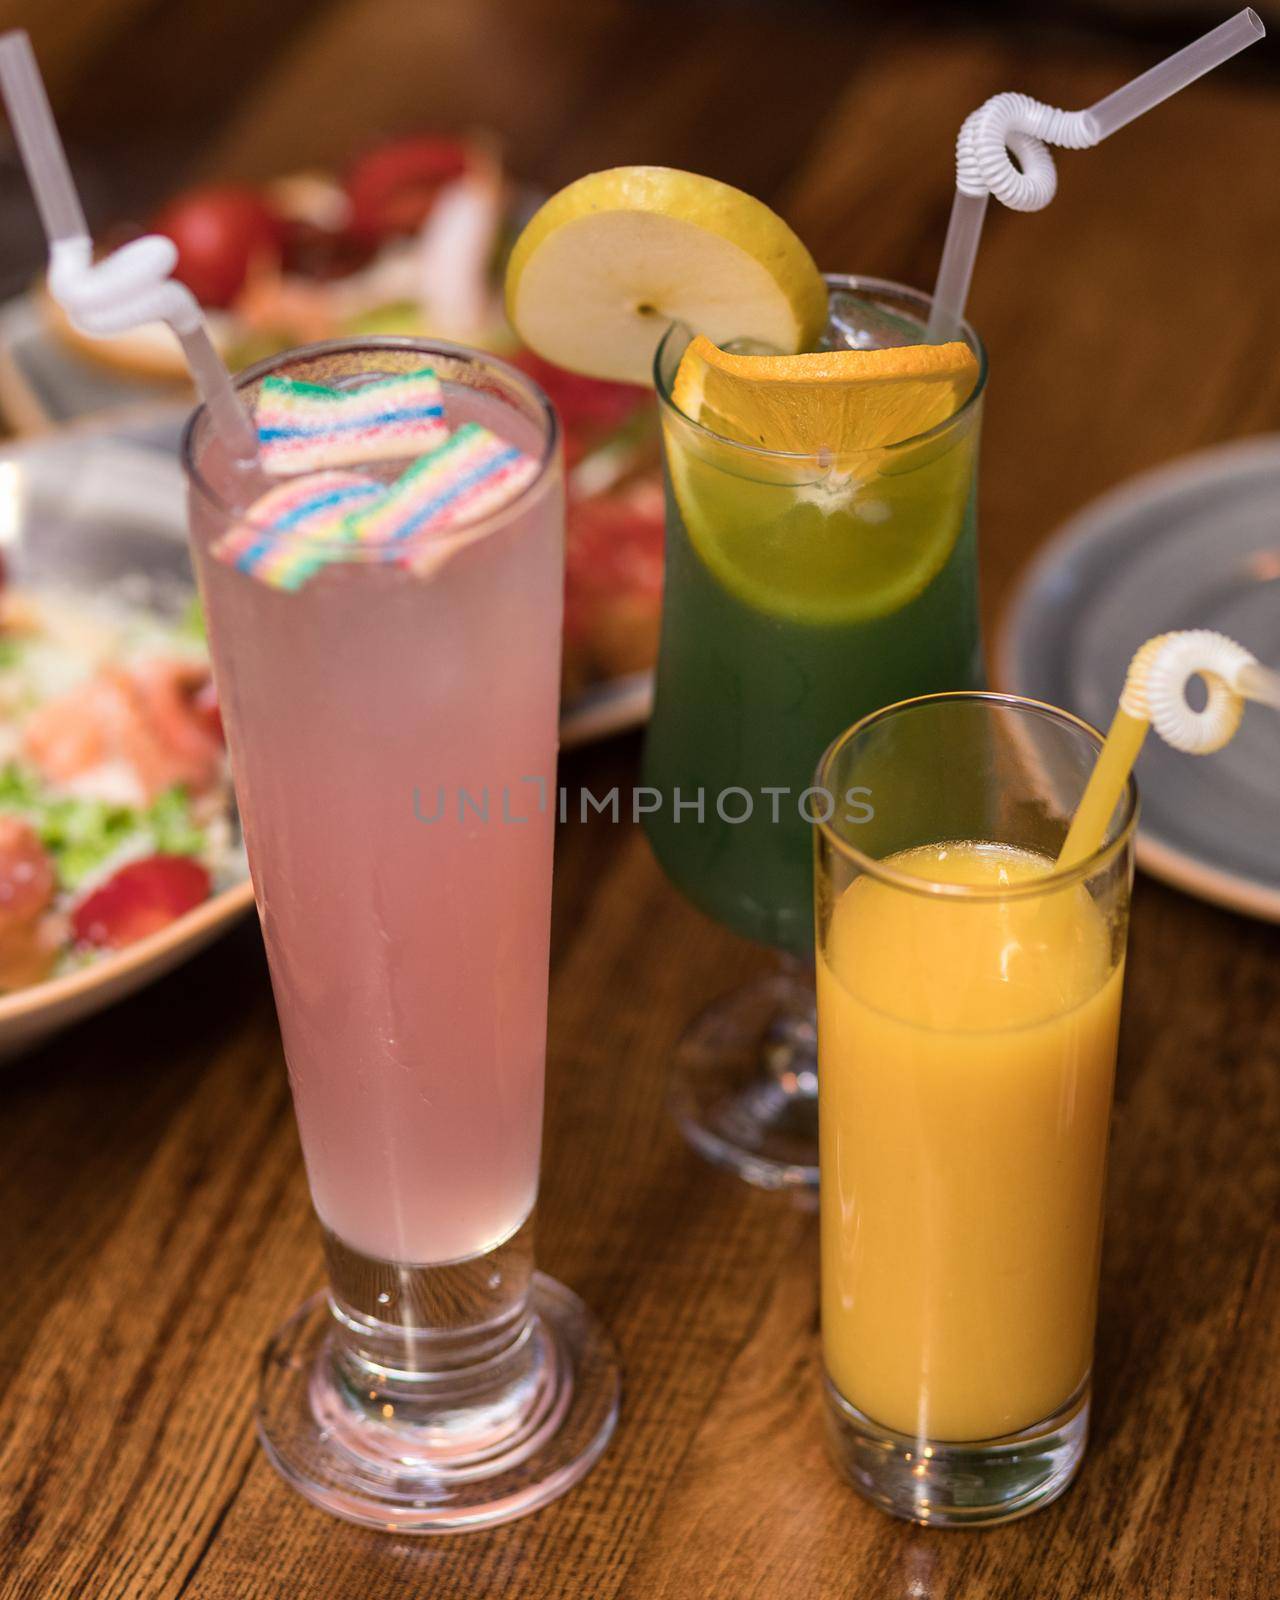 Tasty orange, lemon, marshmallow juice cocktails on the table by ferhad